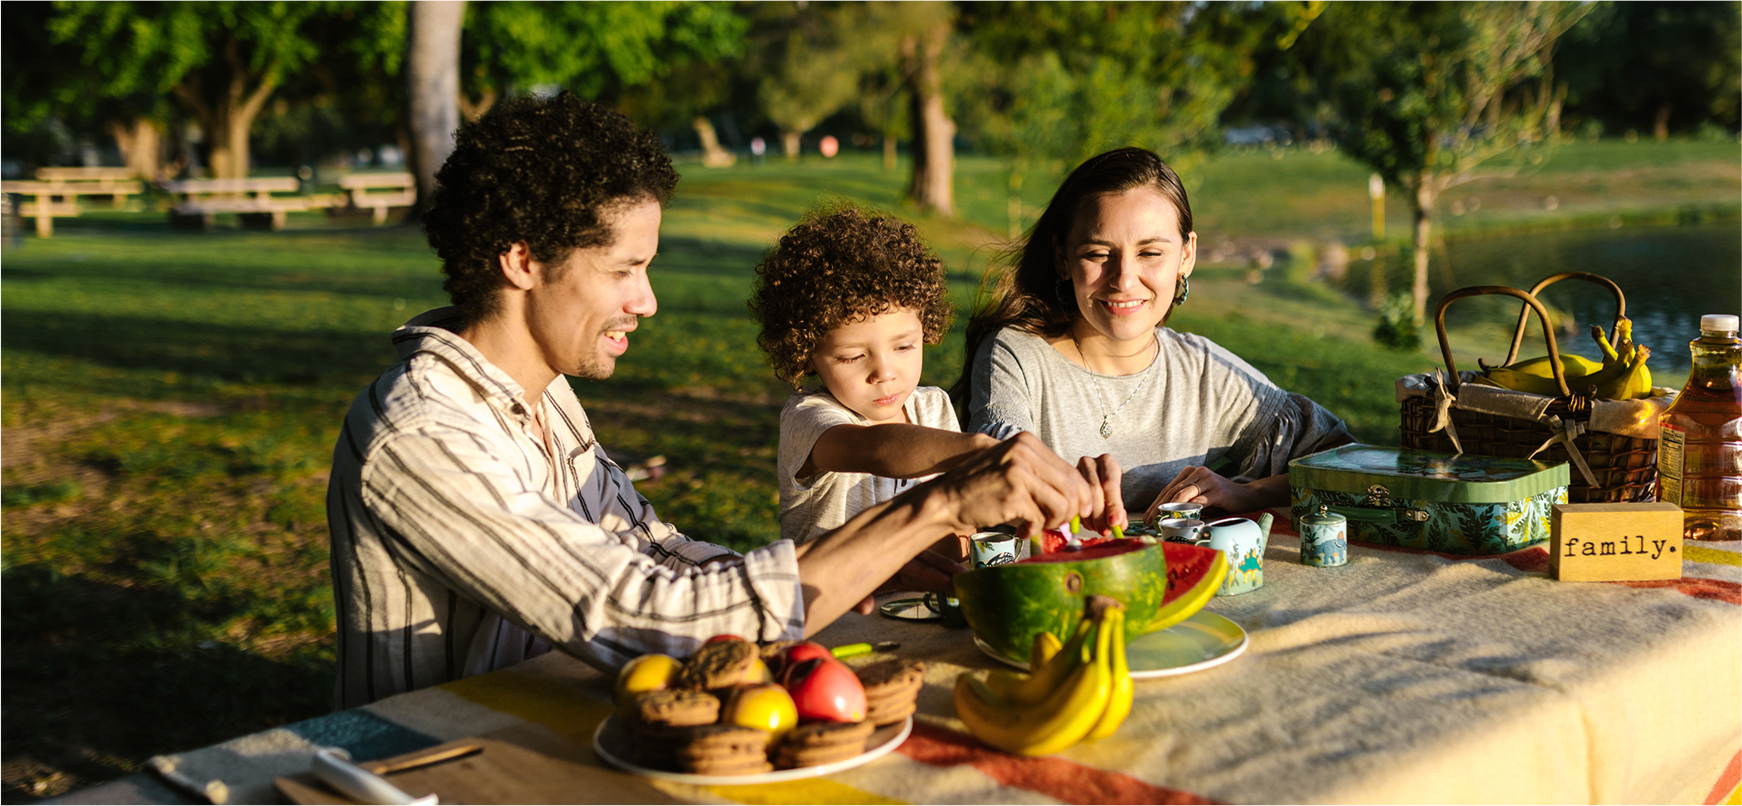 family-having-picnic-edited